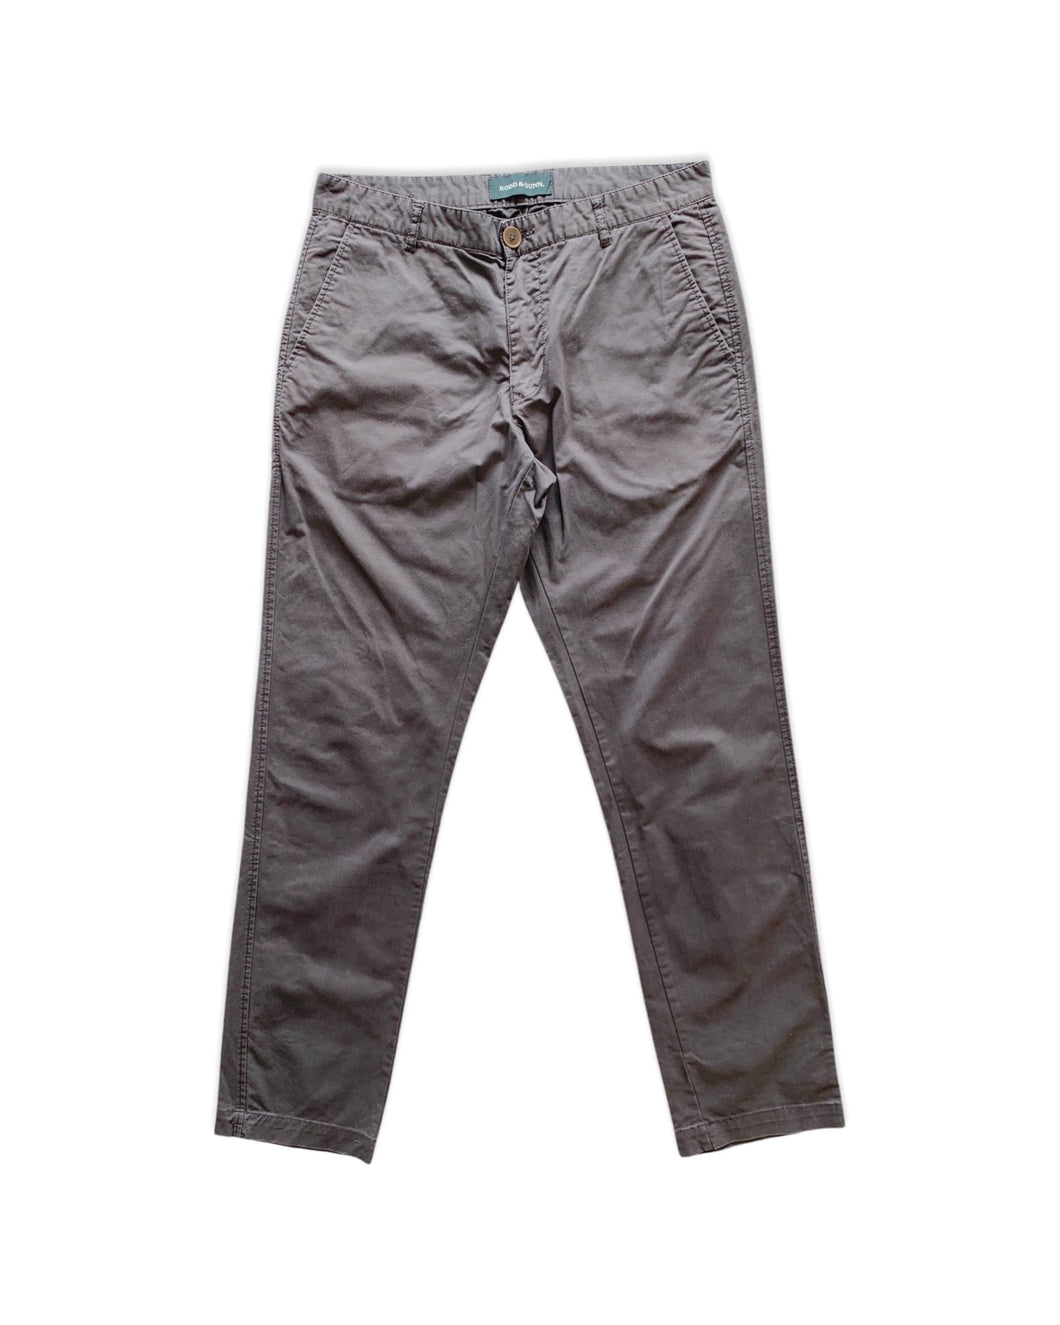 RODD & GUNN Size 32 Straight Fit Pant in Grey 180522